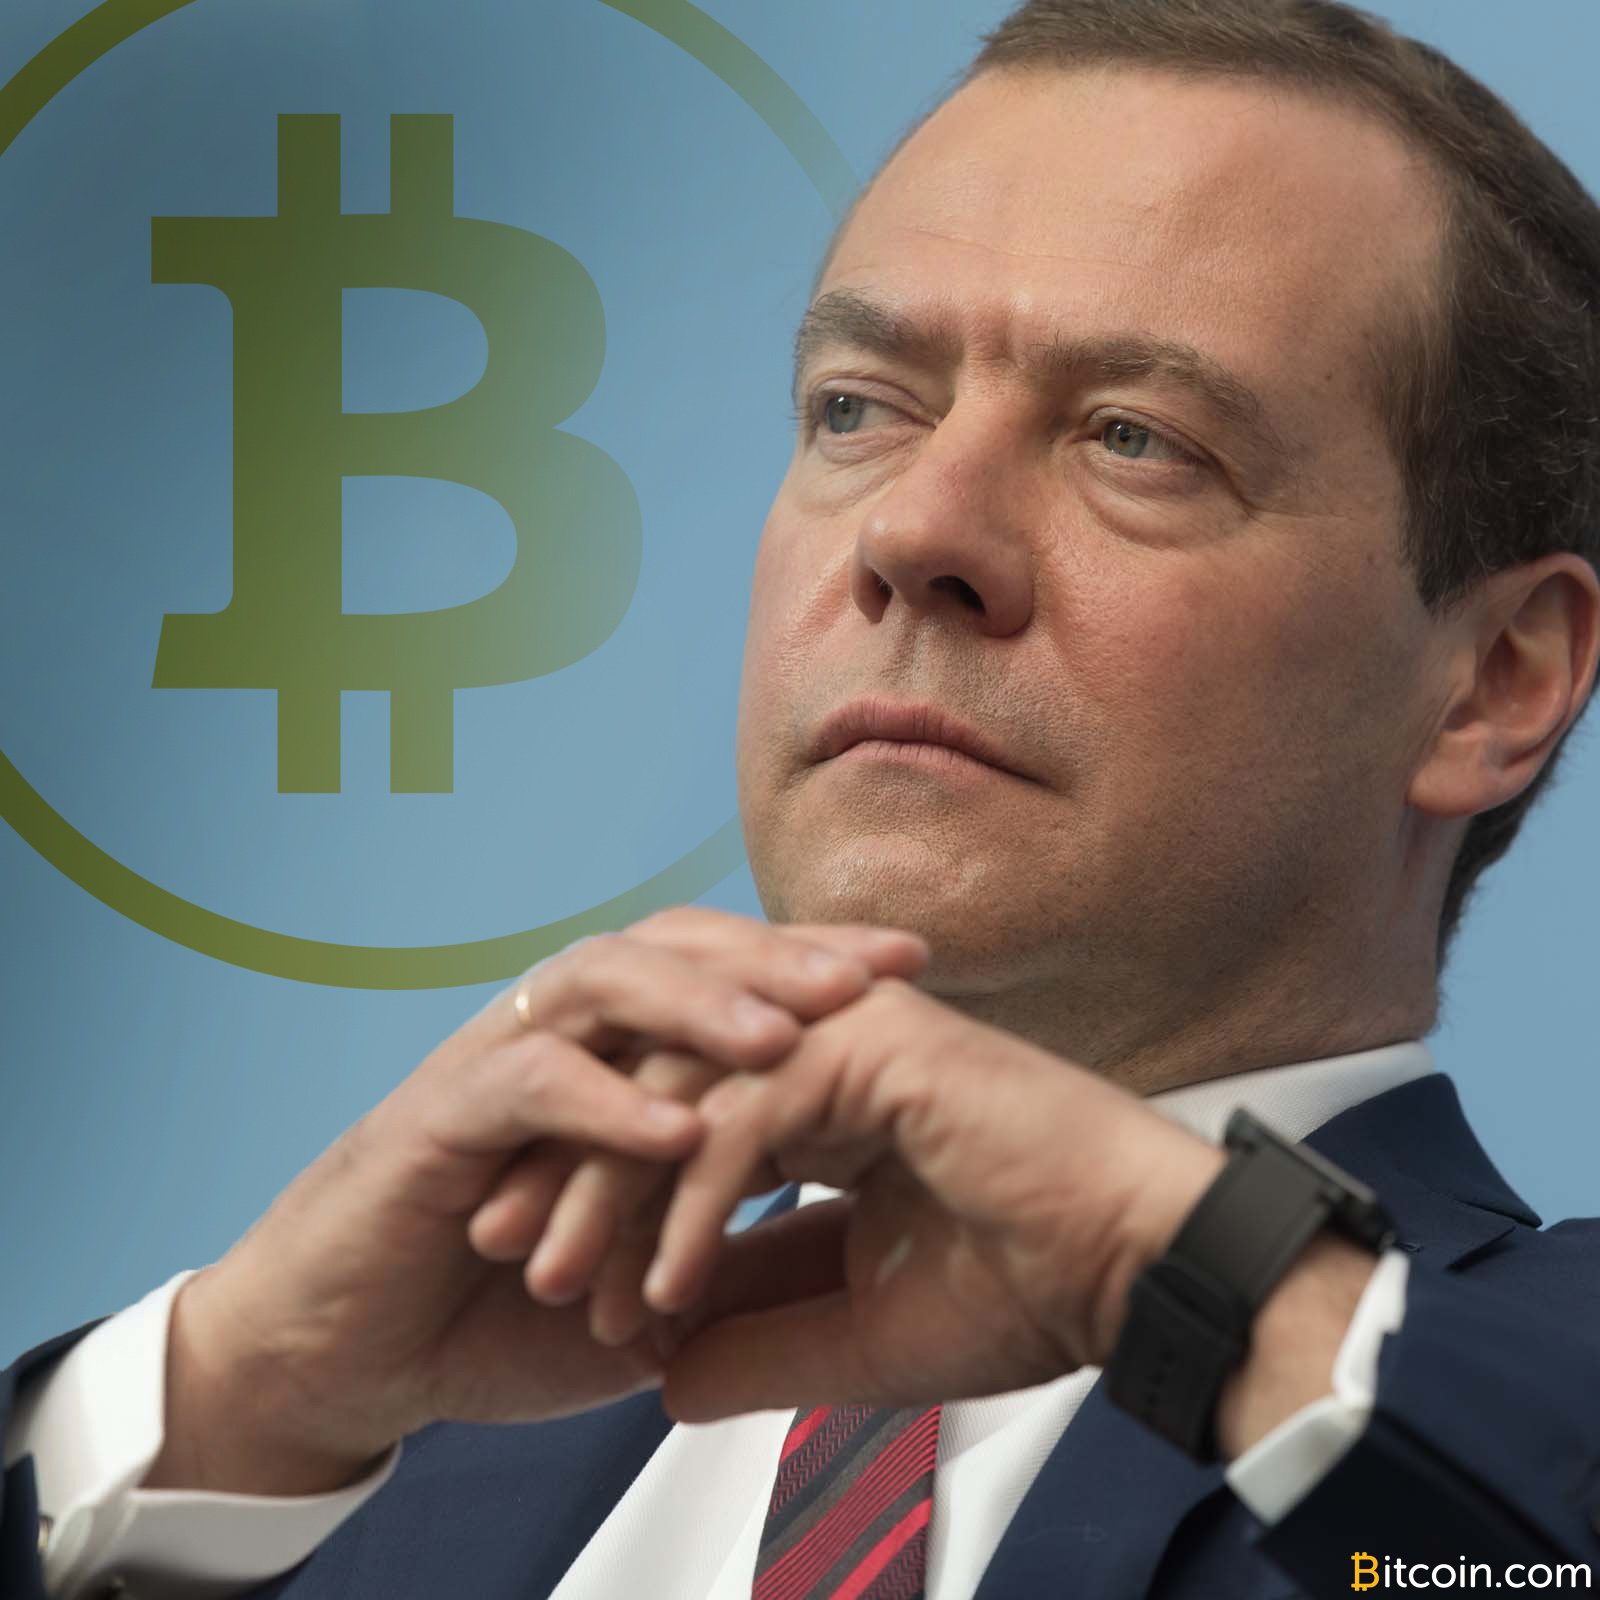 No Reason to 'Bury' Cryptocurrencies, Russian PM Medvedev Says